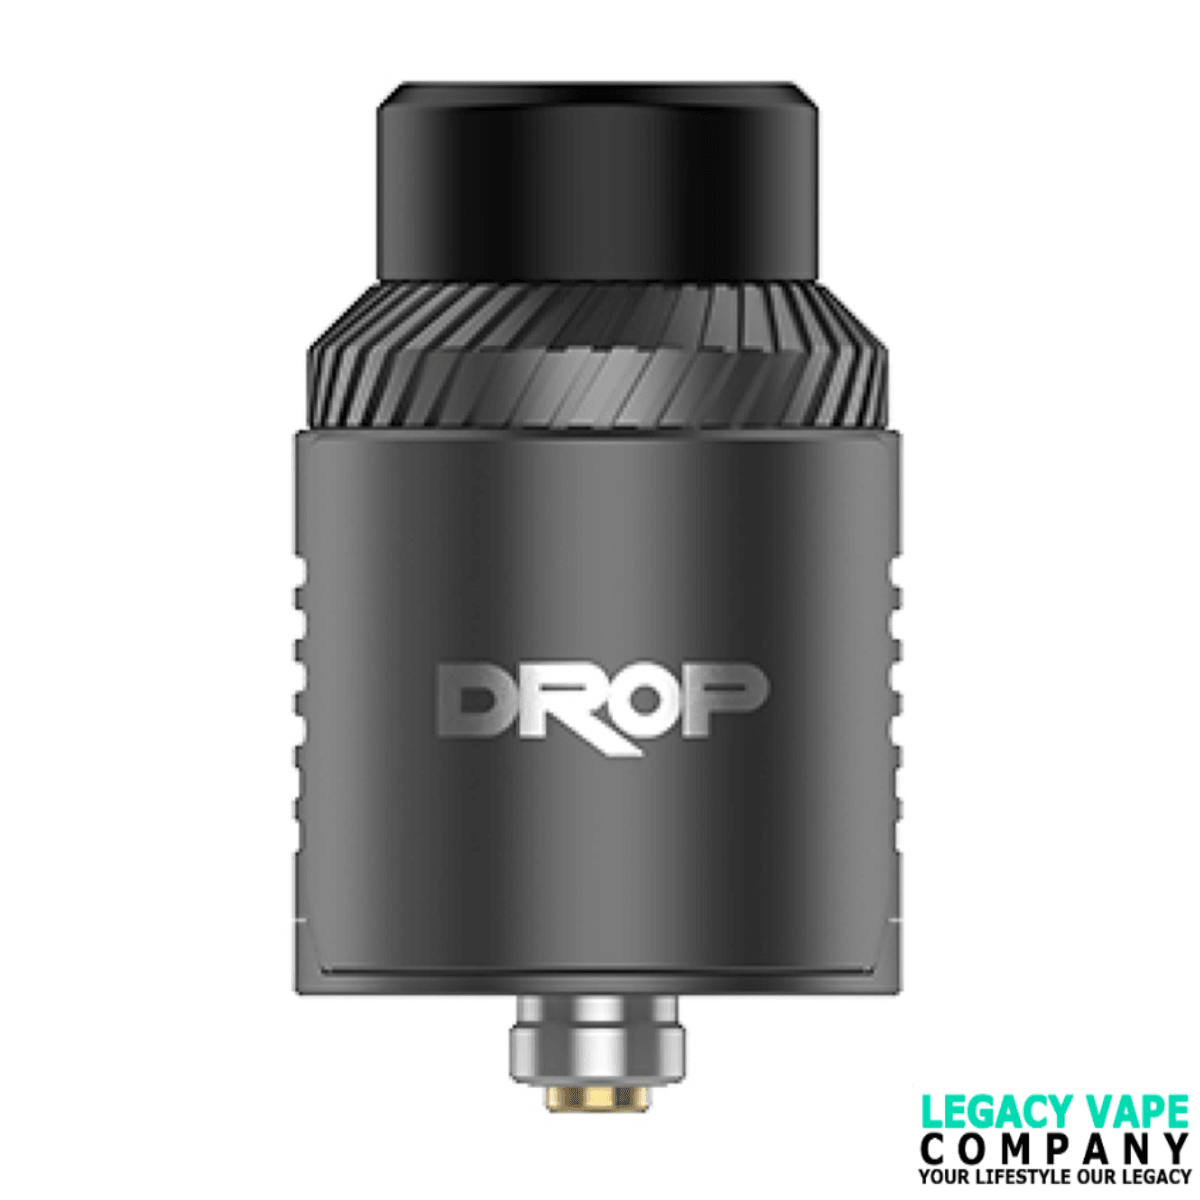 Digiflavor Drop V1.5 RDA Atomizer Legacy Vape Company.